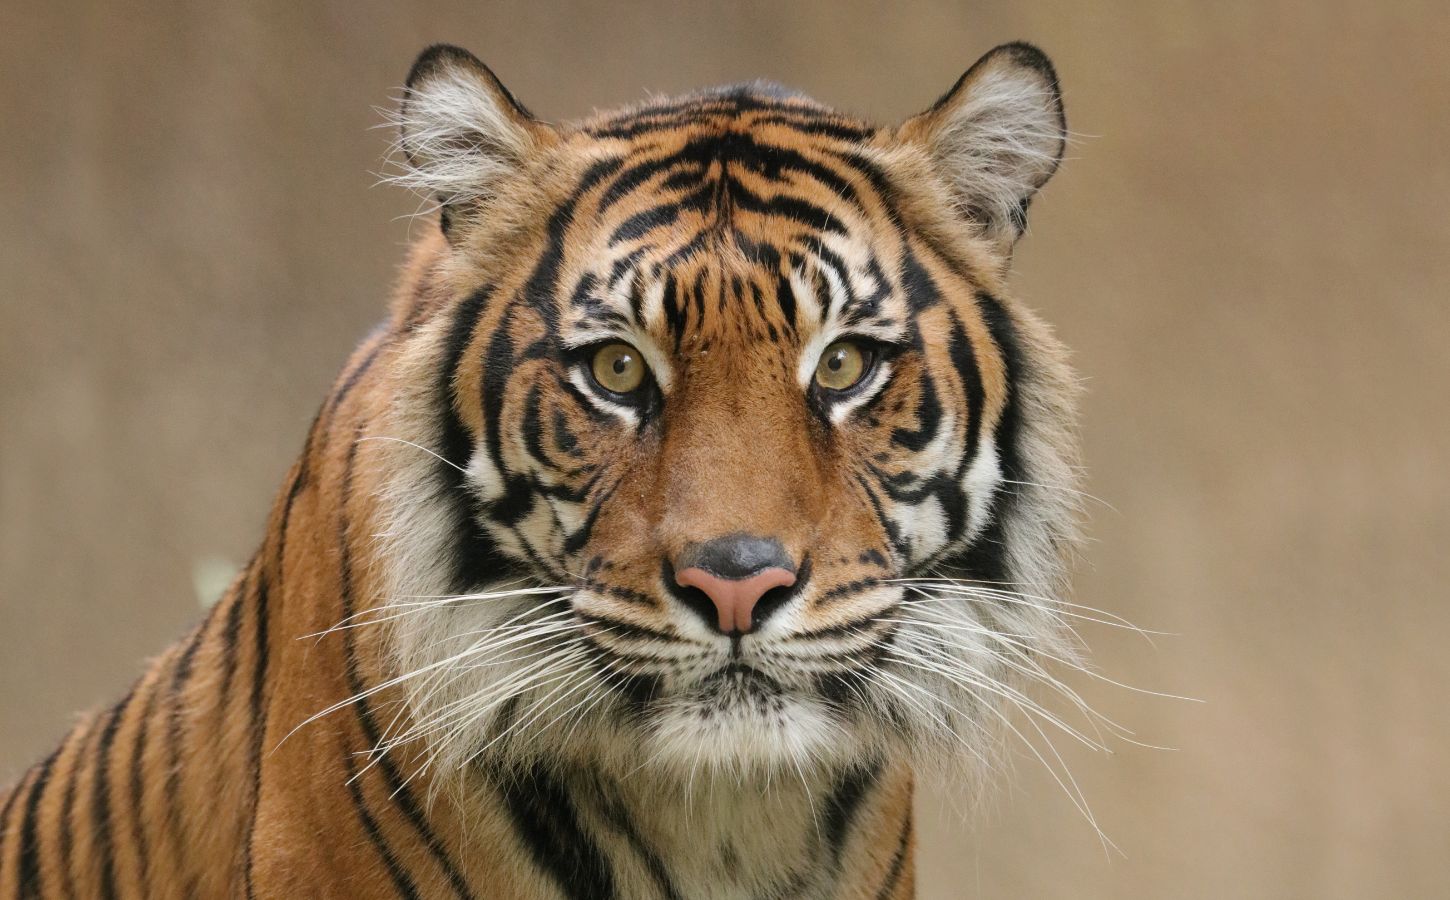 A Bengal tiger looking at the camera